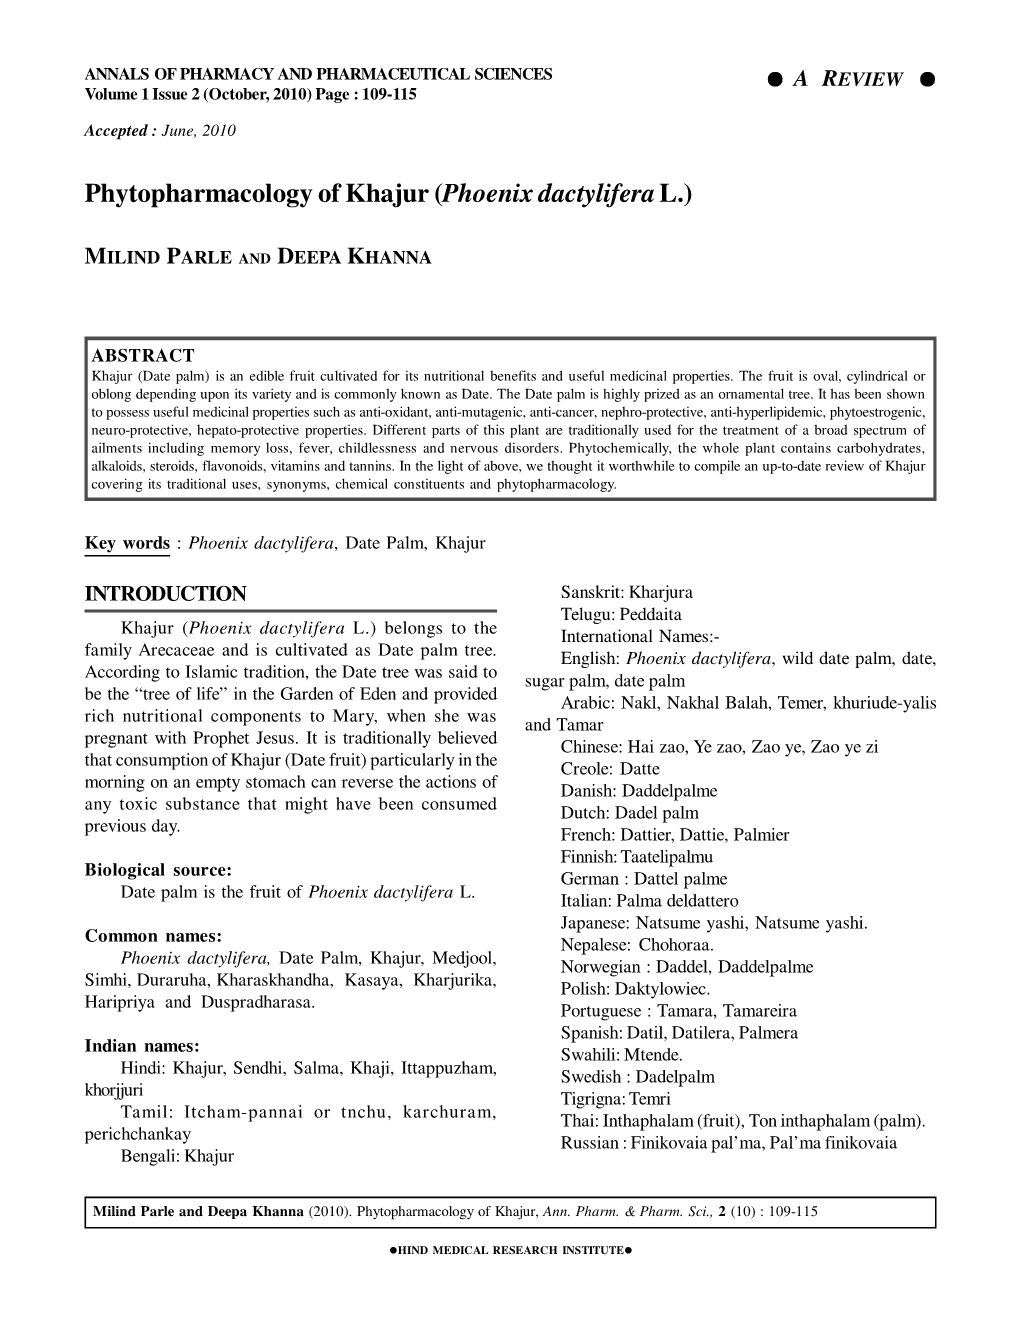 Phytopharmacology of Khajur ( Phoenix Dactylifera L.)